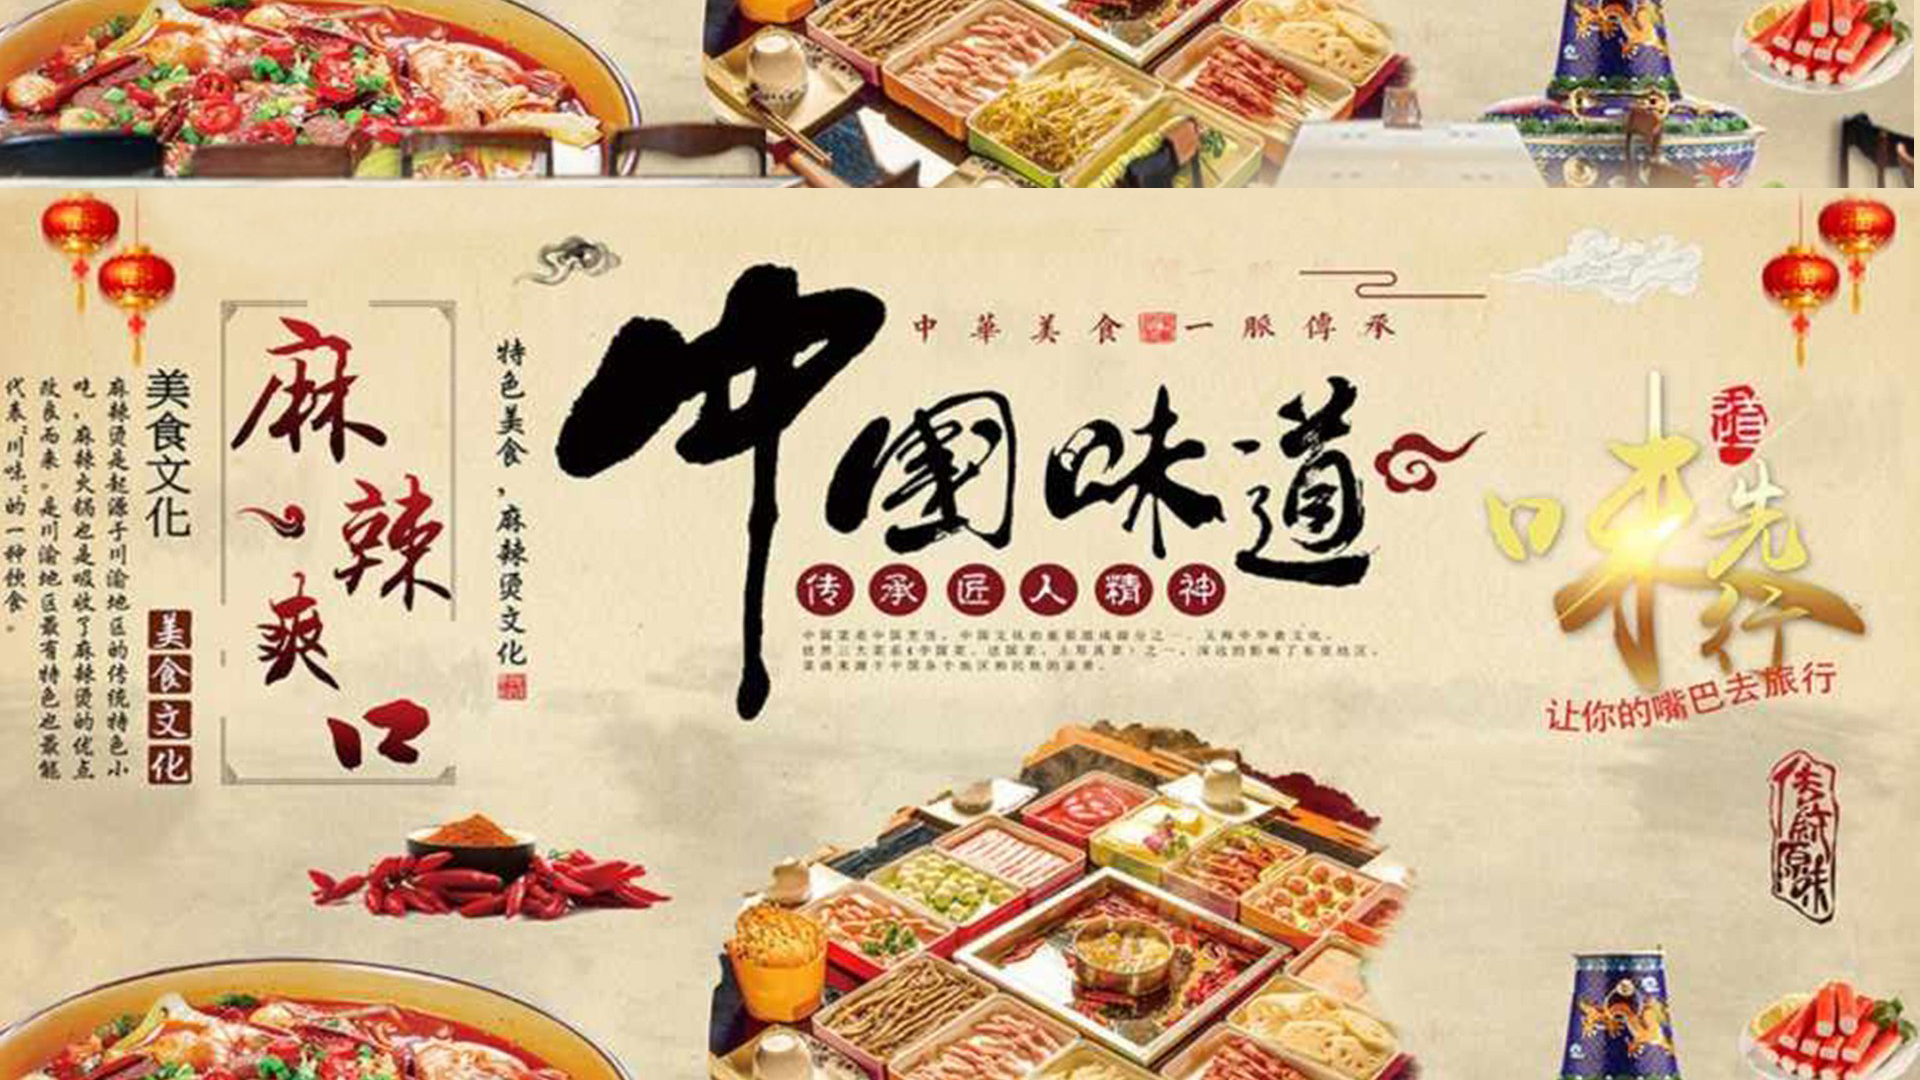 Masakan dan budaya Cina